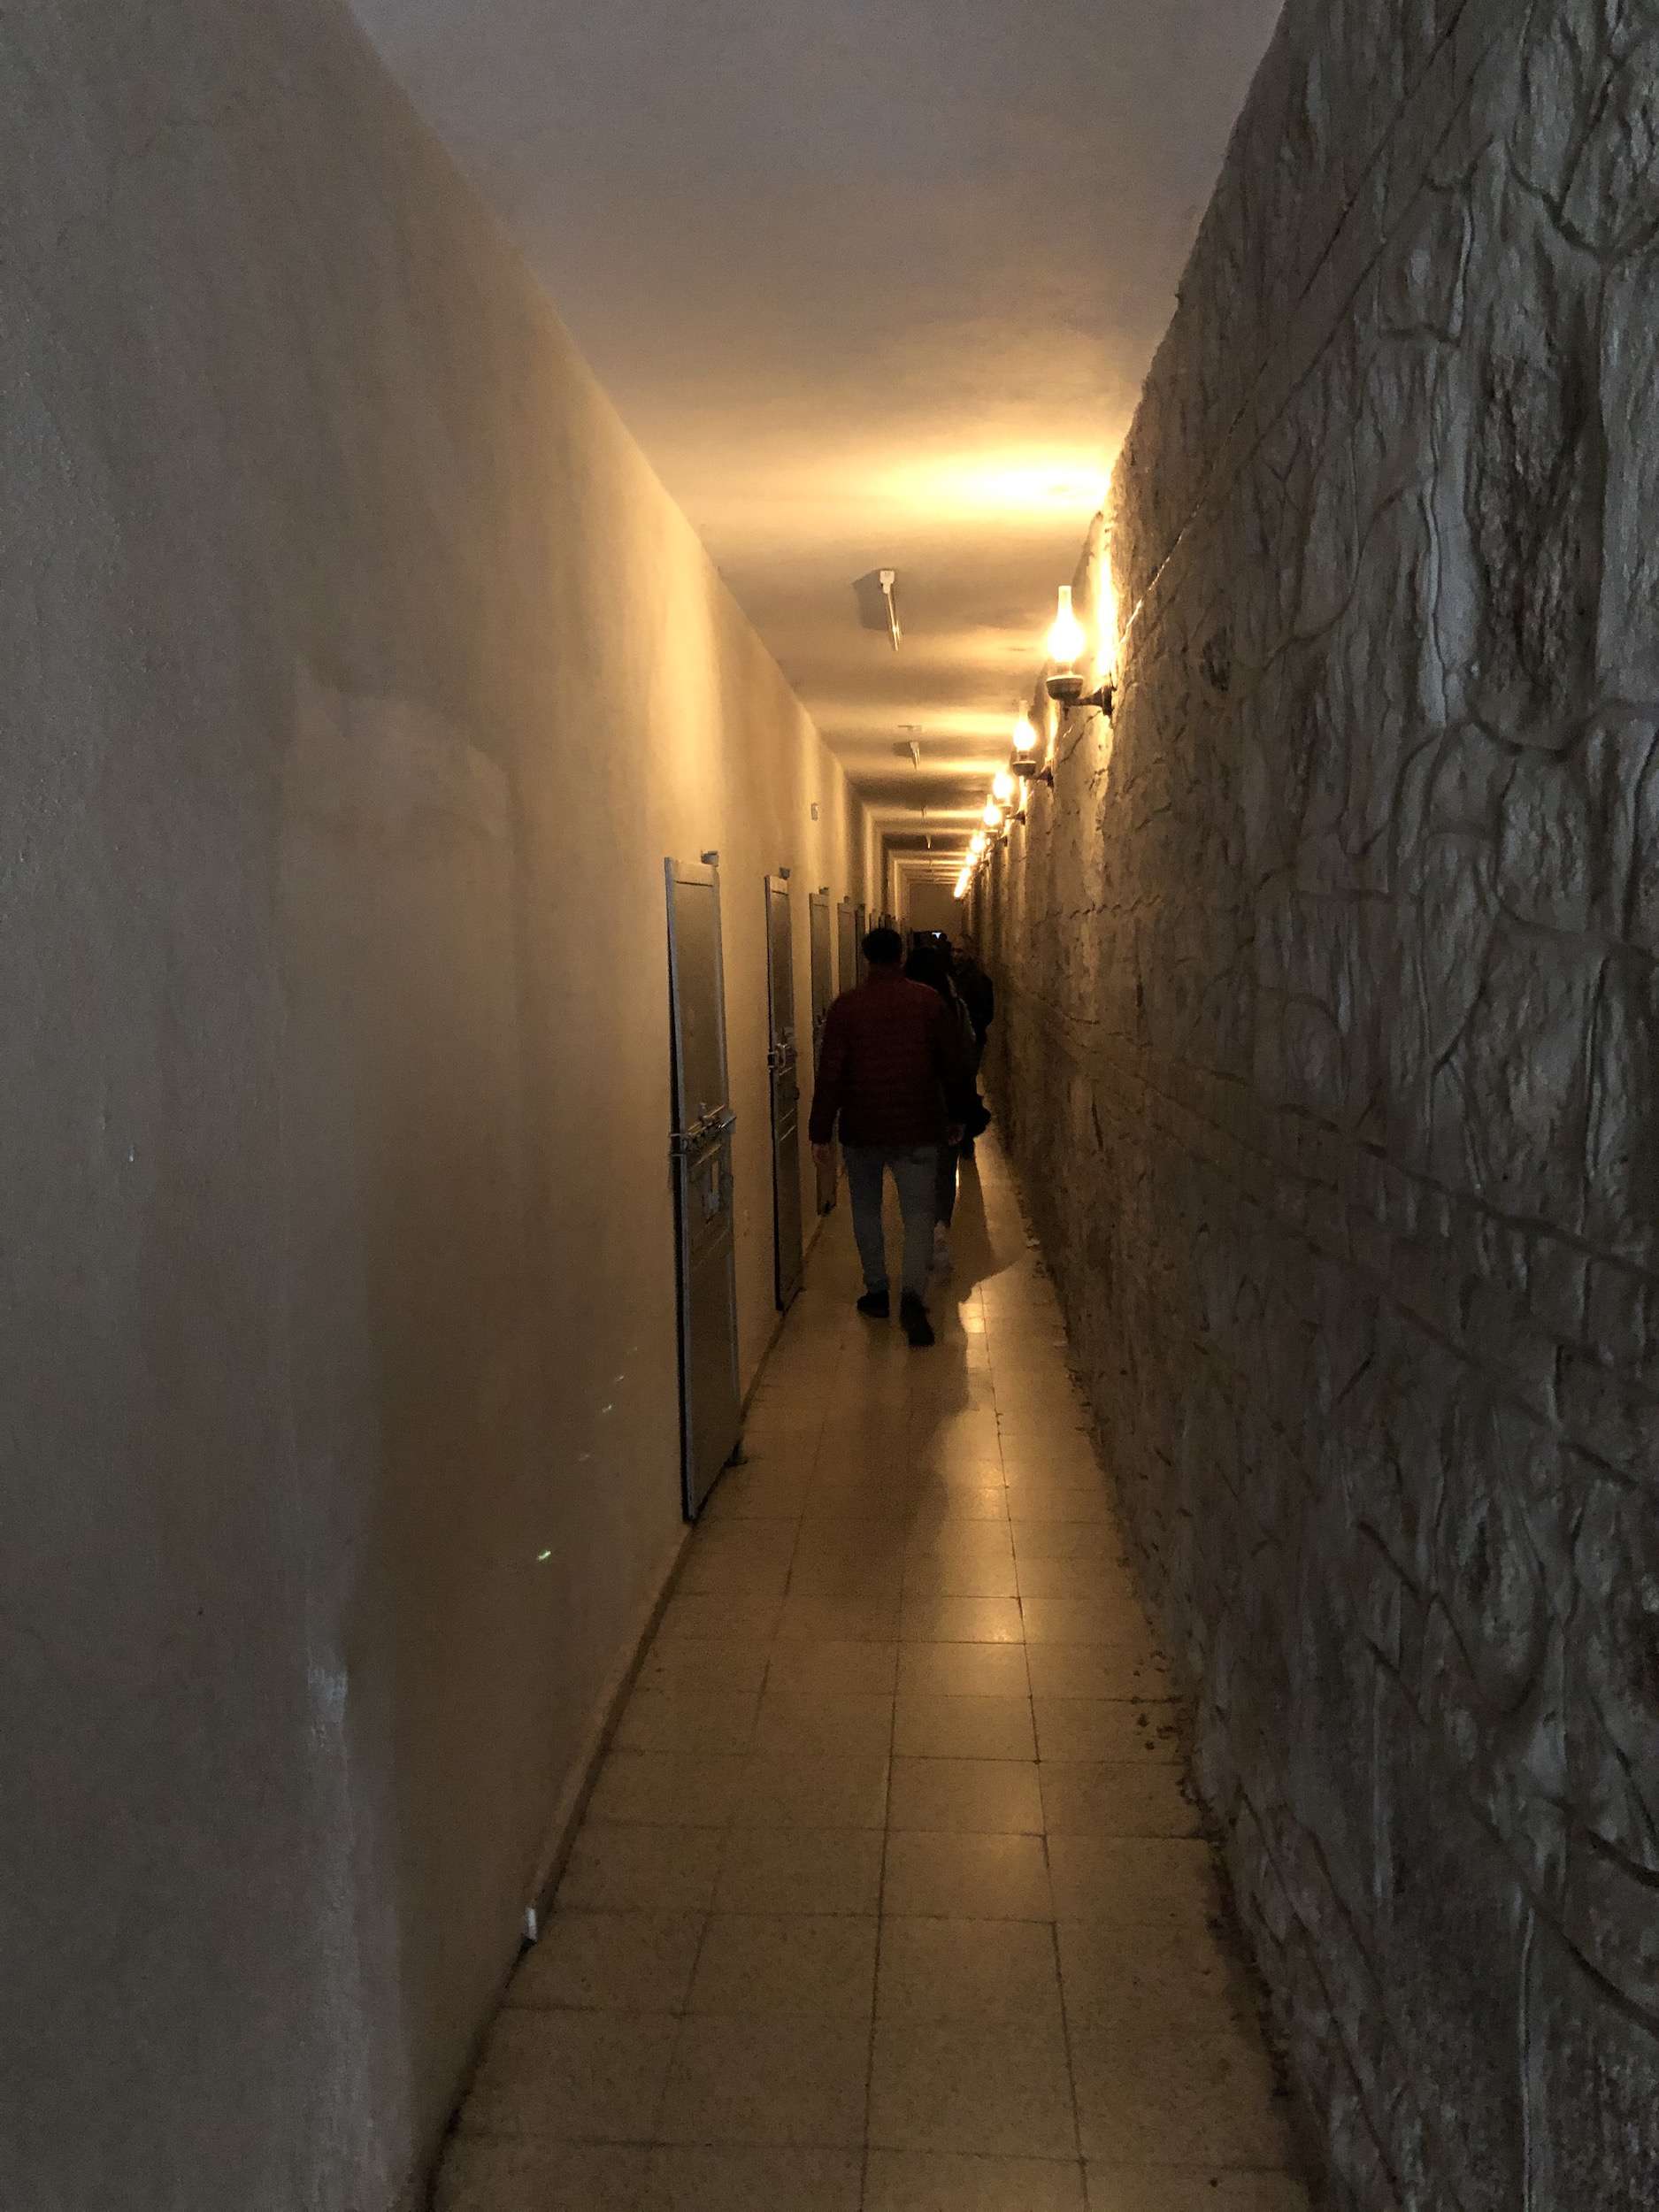 Isolation Ward at Ulucanlar Prison in Ankara, Turkey